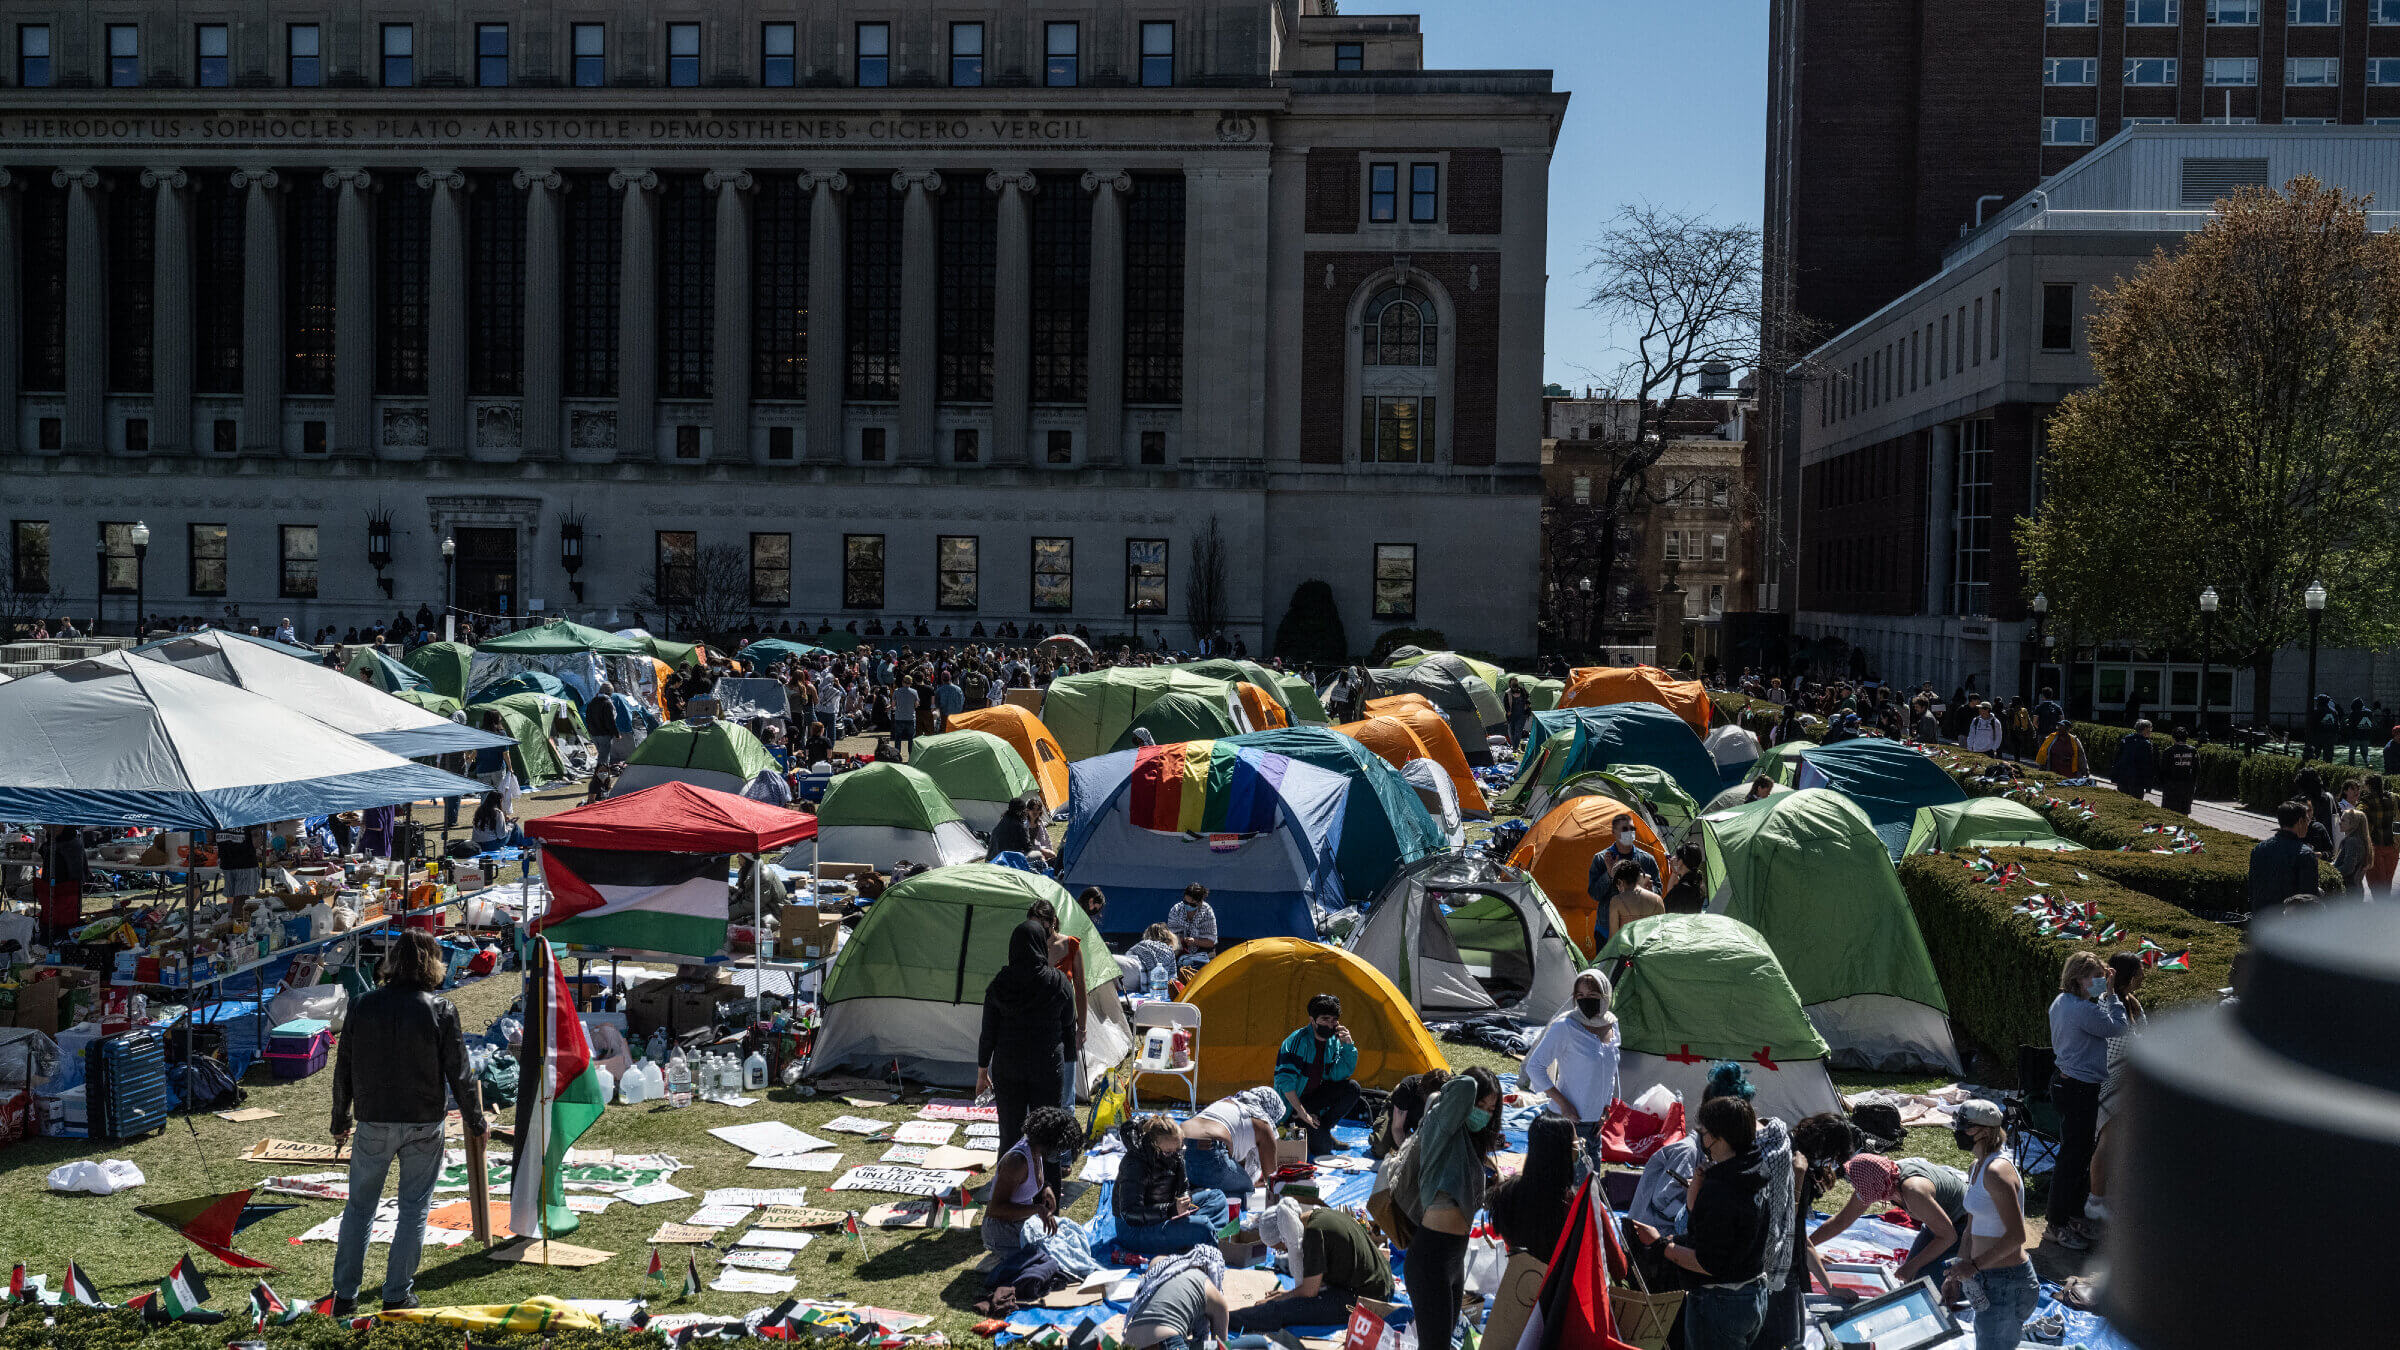 The "Gaza Solidarity Encampment" at Columbia University on April 23, 2024 